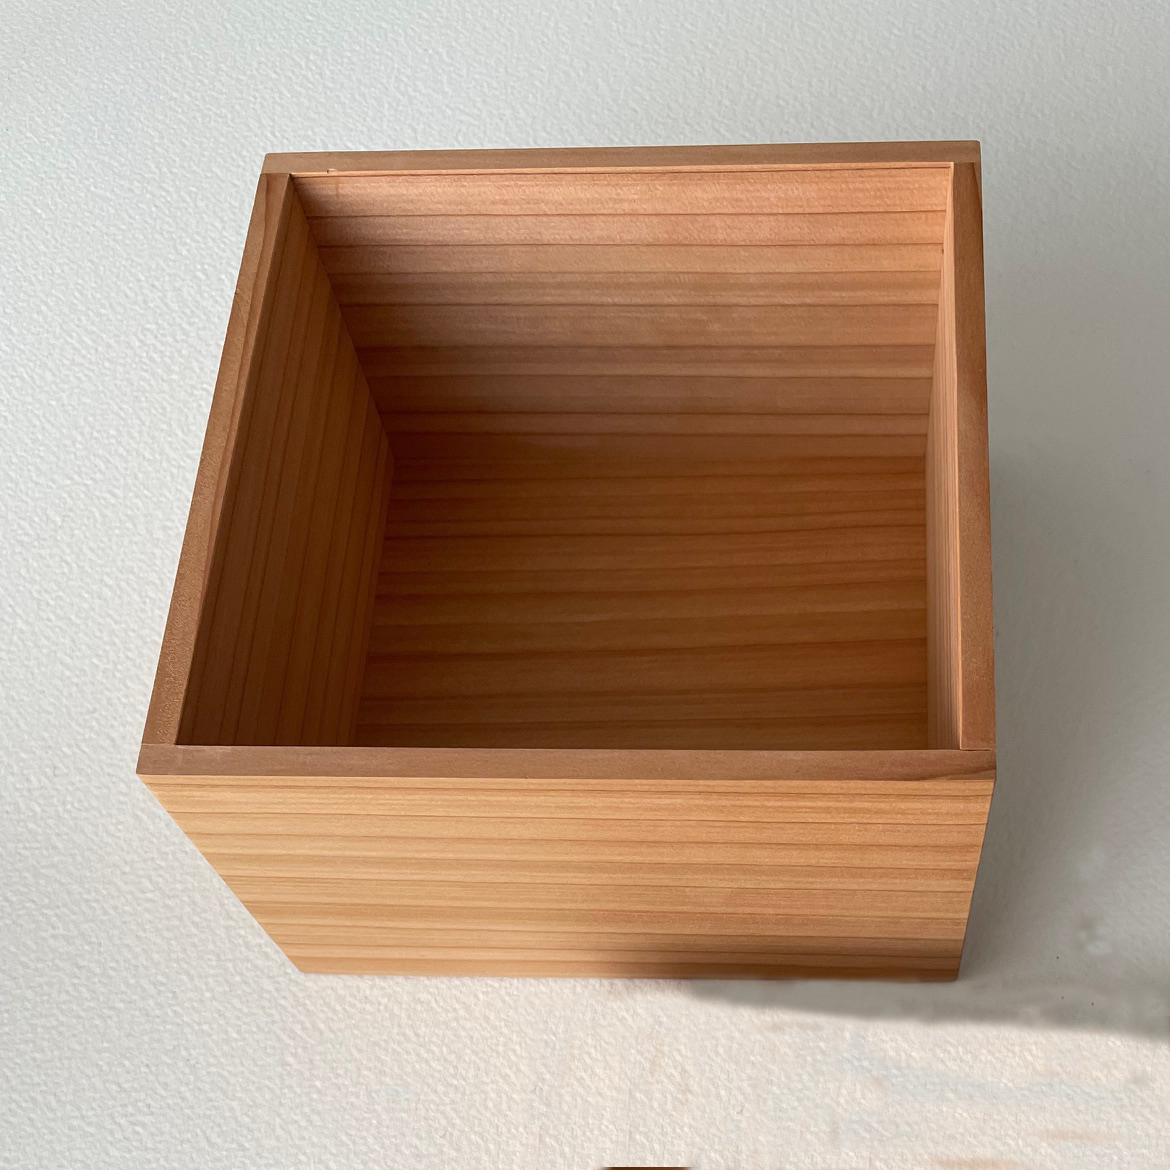 Make Small Japanese Boxes